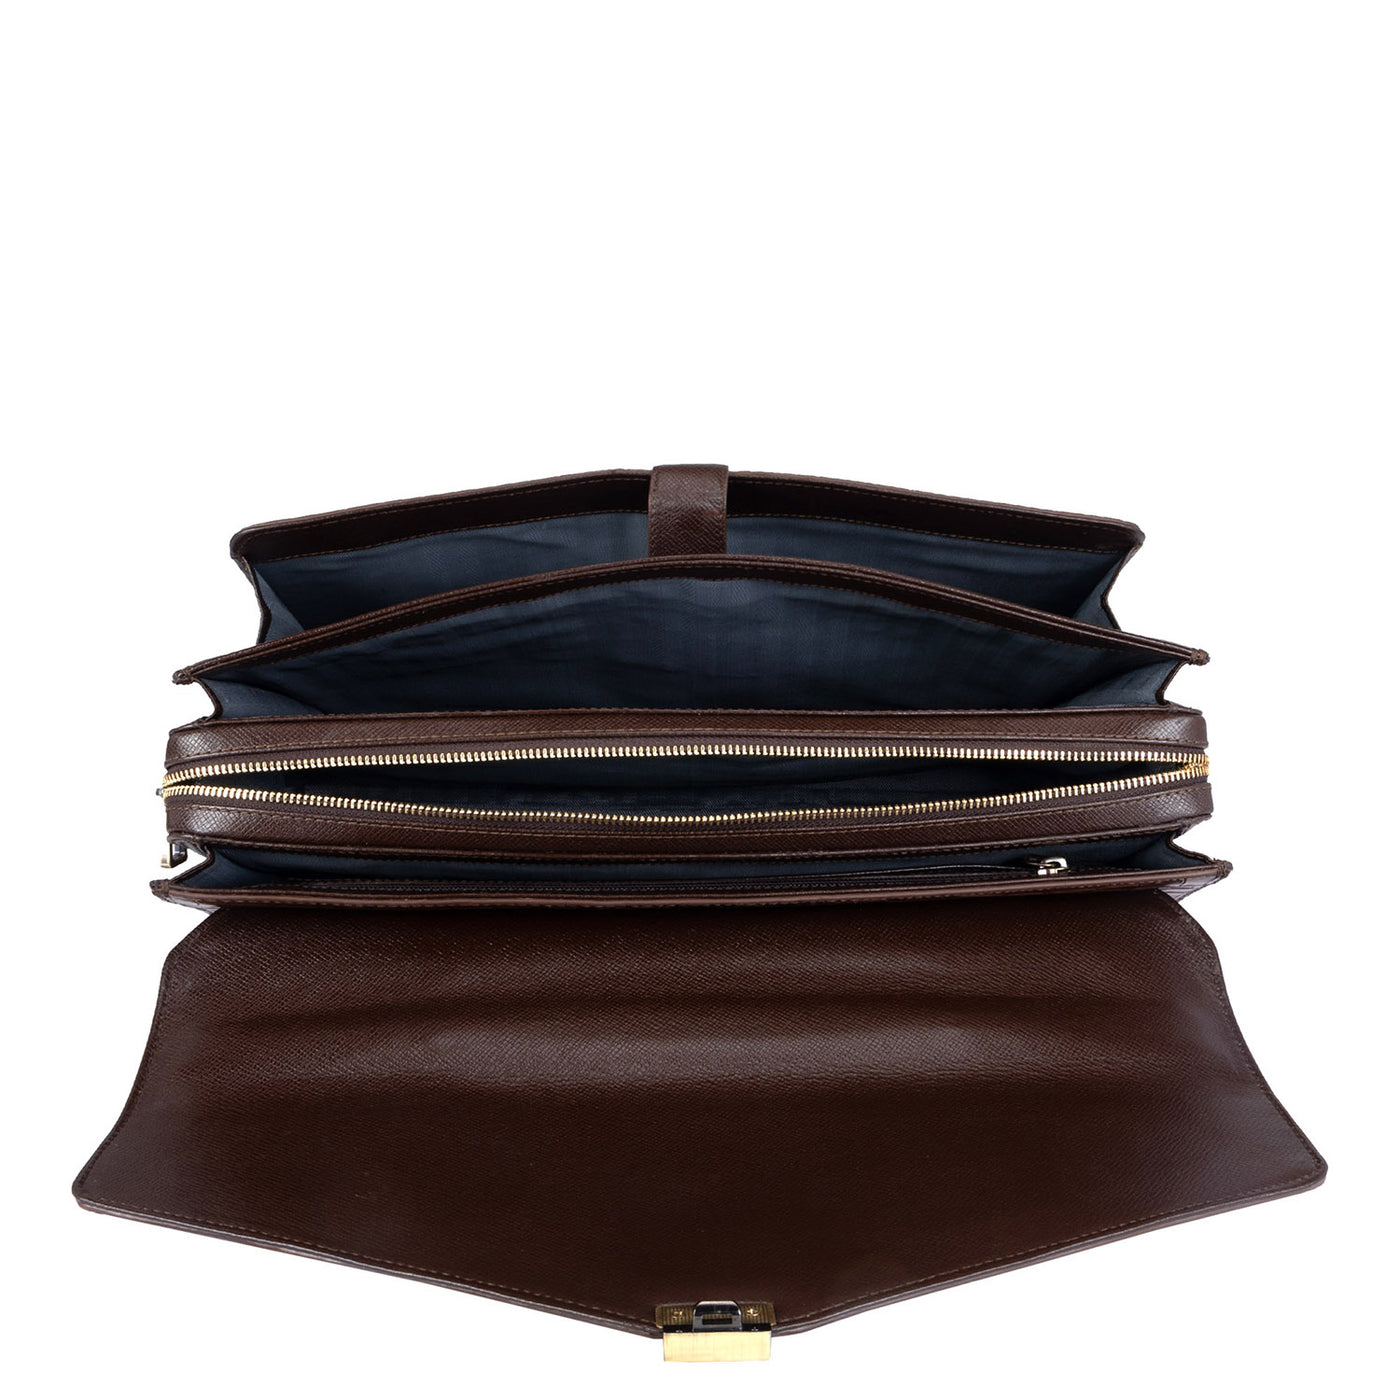 Croco Leather Portfolio - Brown